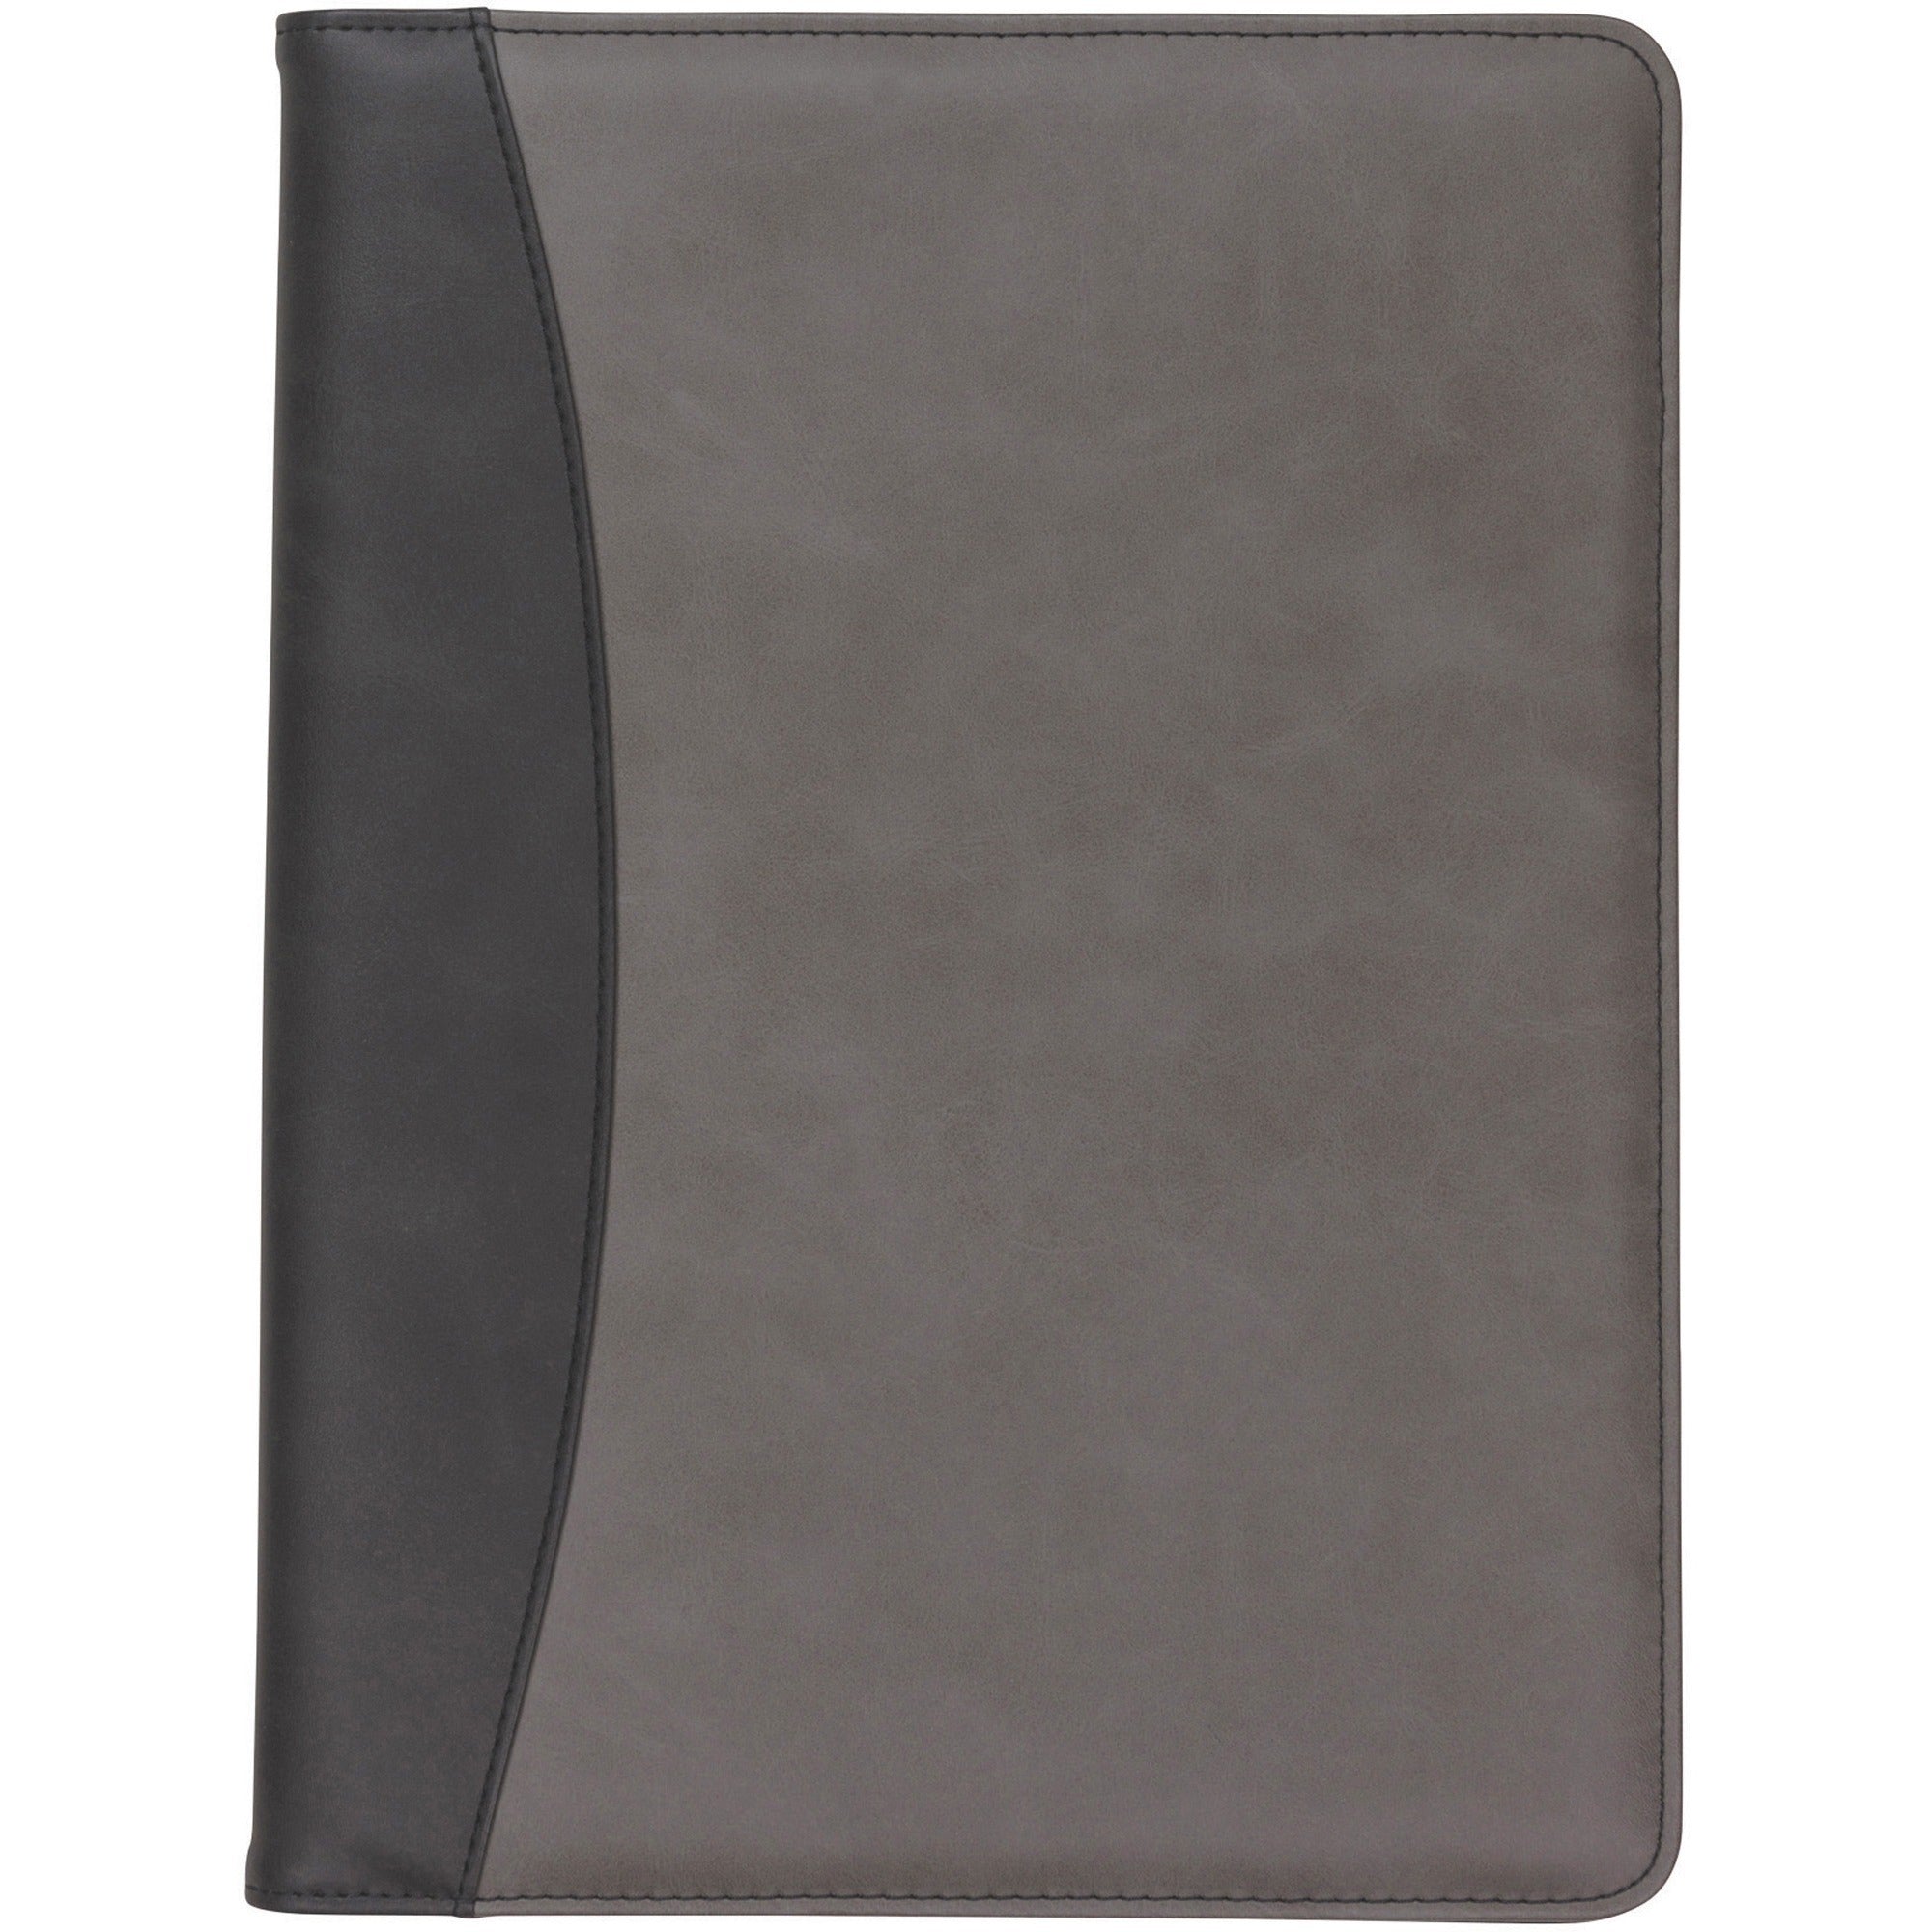 Samsill 71650 Pad Folio - Black, Gray - 1 Each - 2